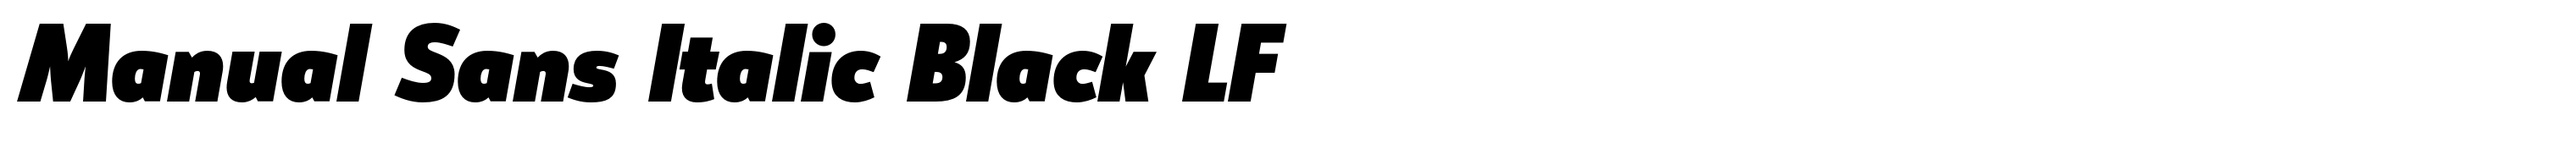 Manual Sans Italic Black LF